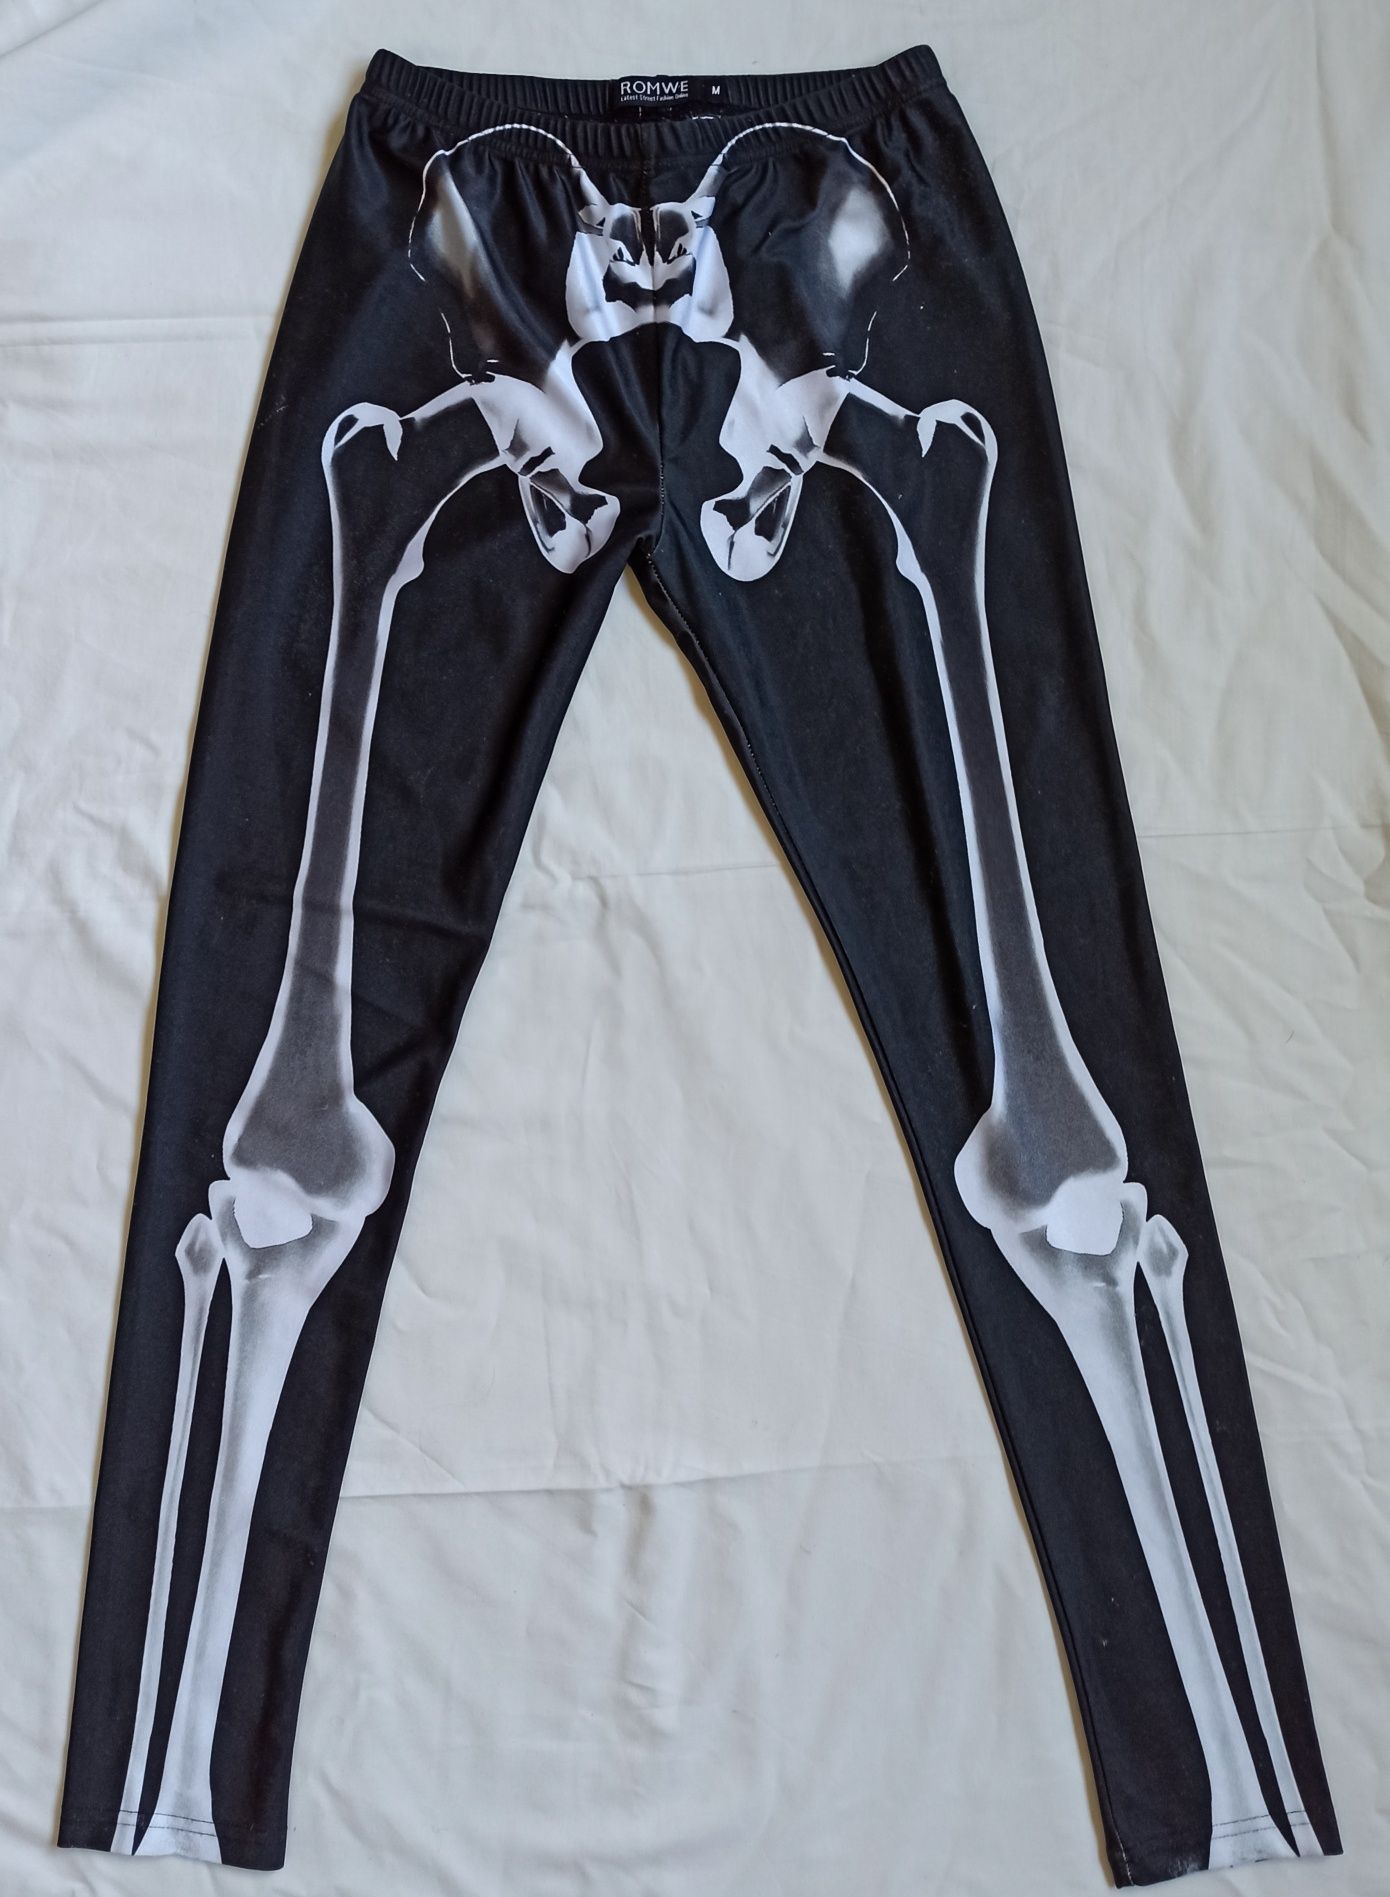 Leggings ROMWE com print esqueleto